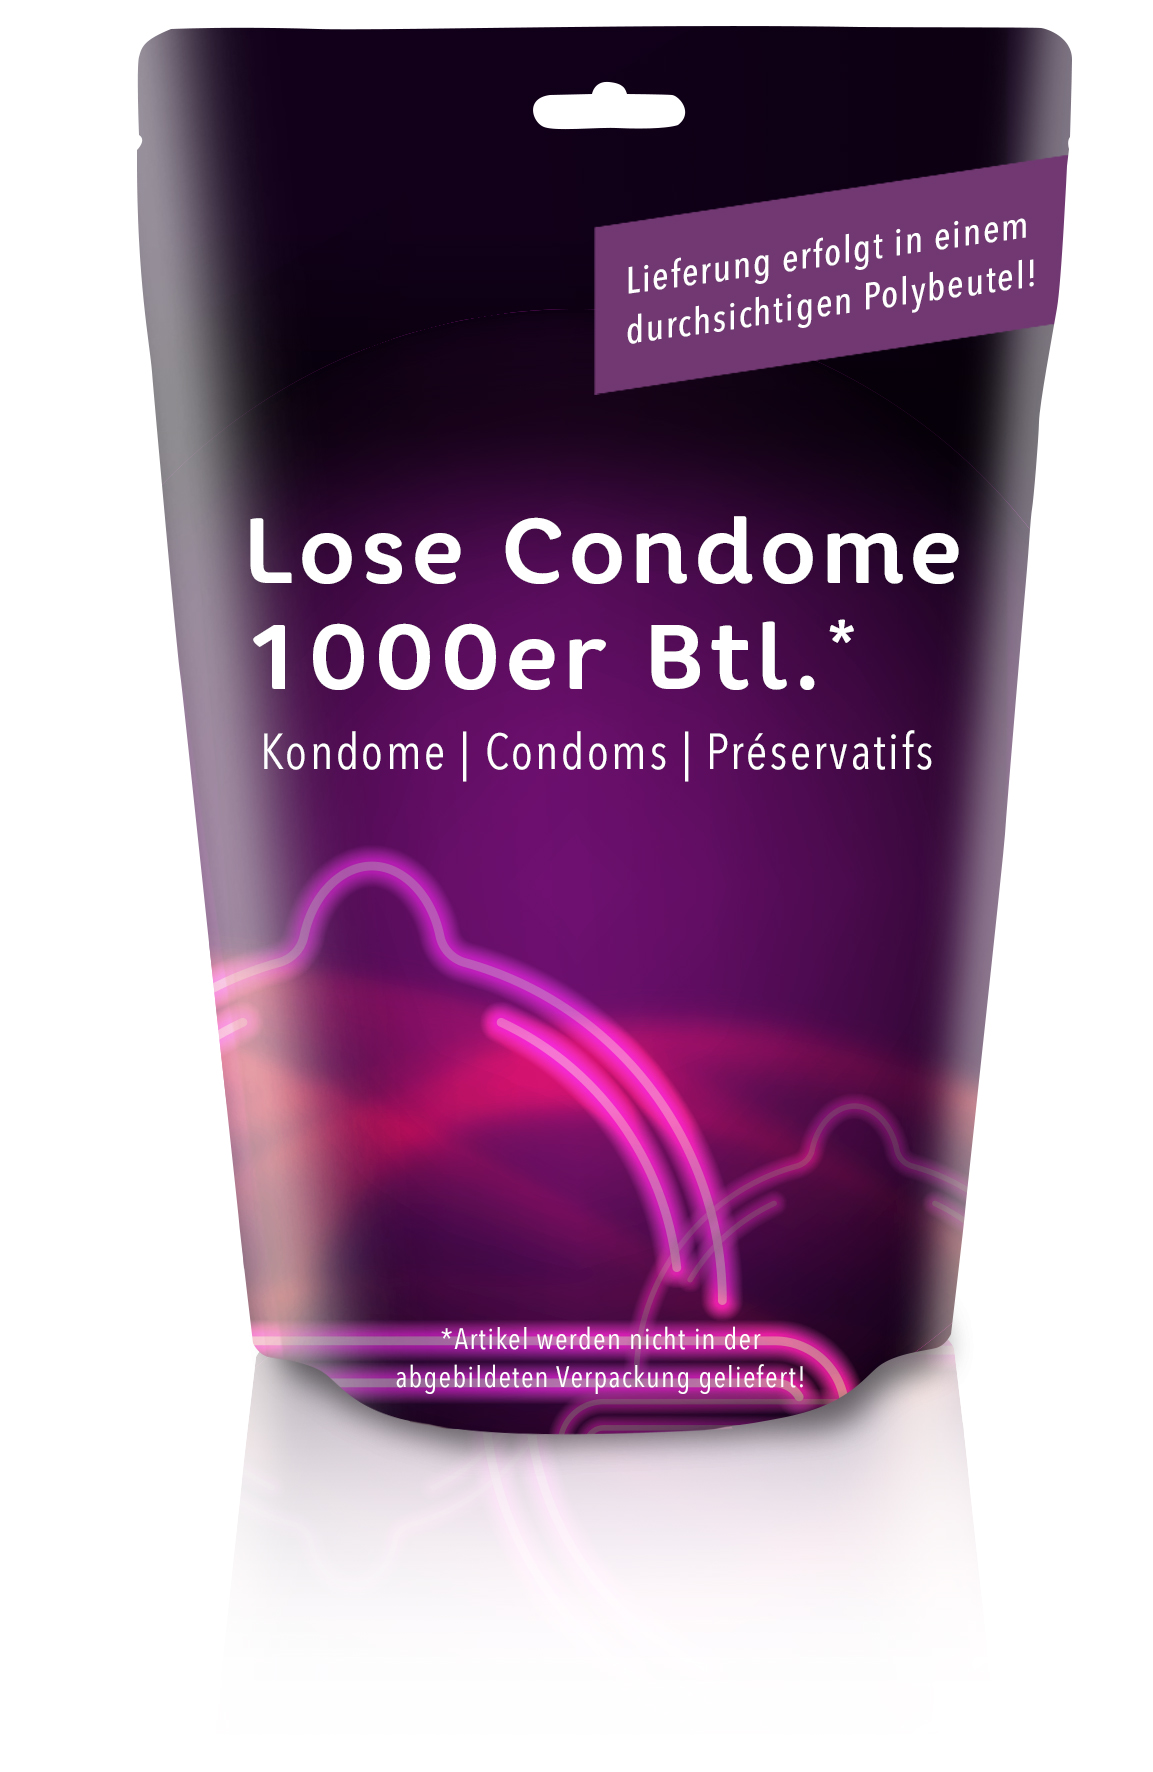 Lose Condome 1000er Btl.